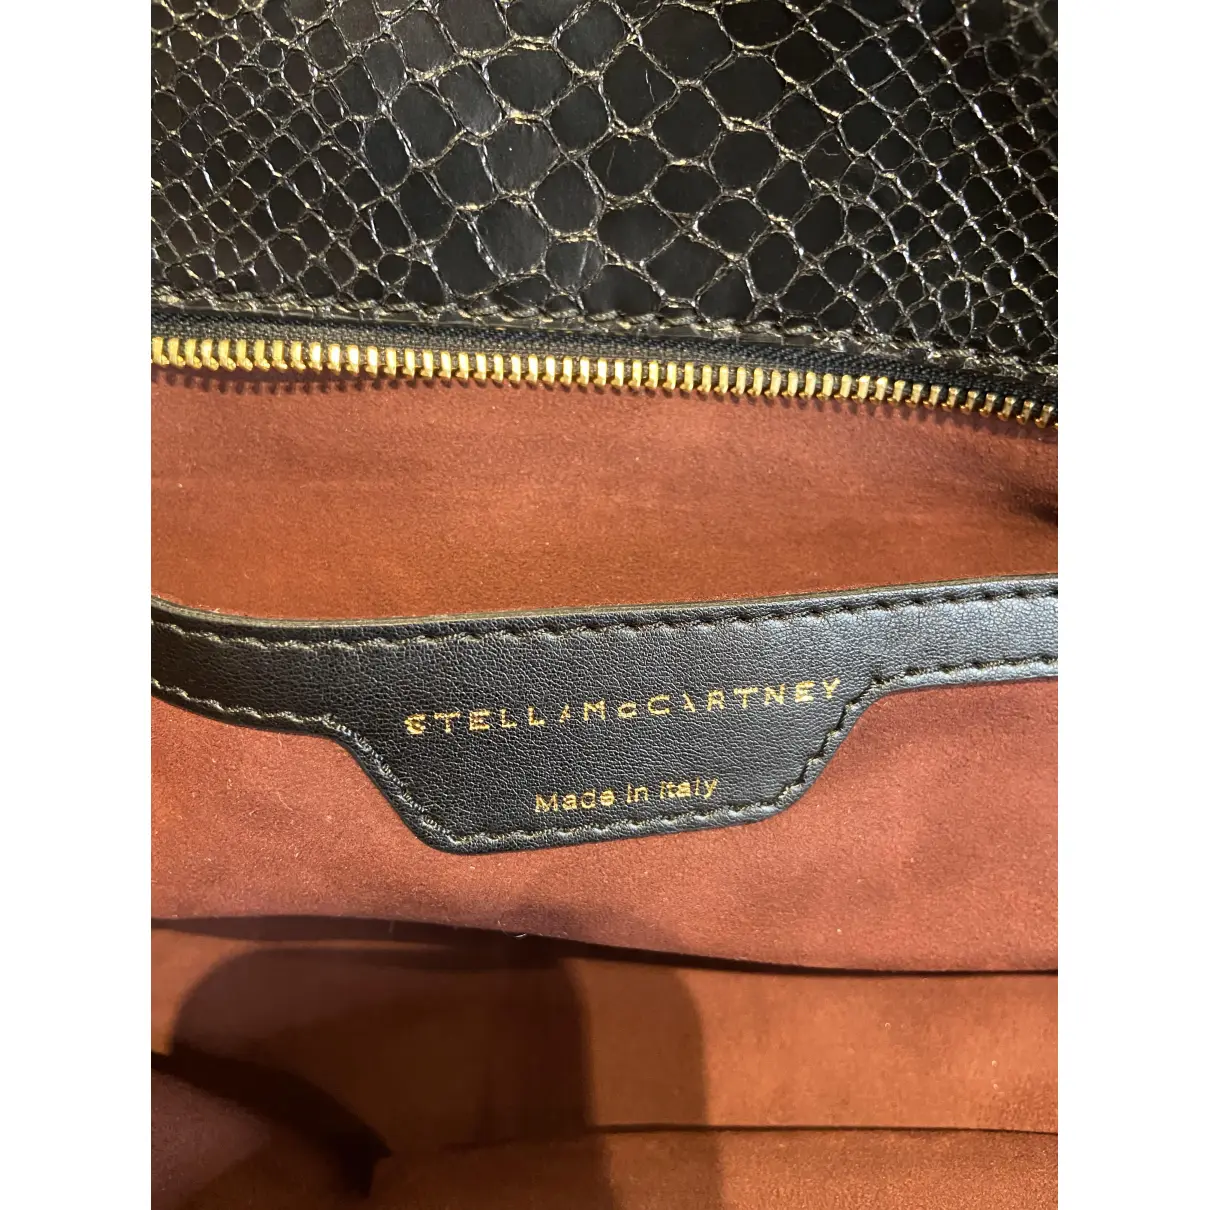 Cavendish vegan leather handbag Stella McCartney